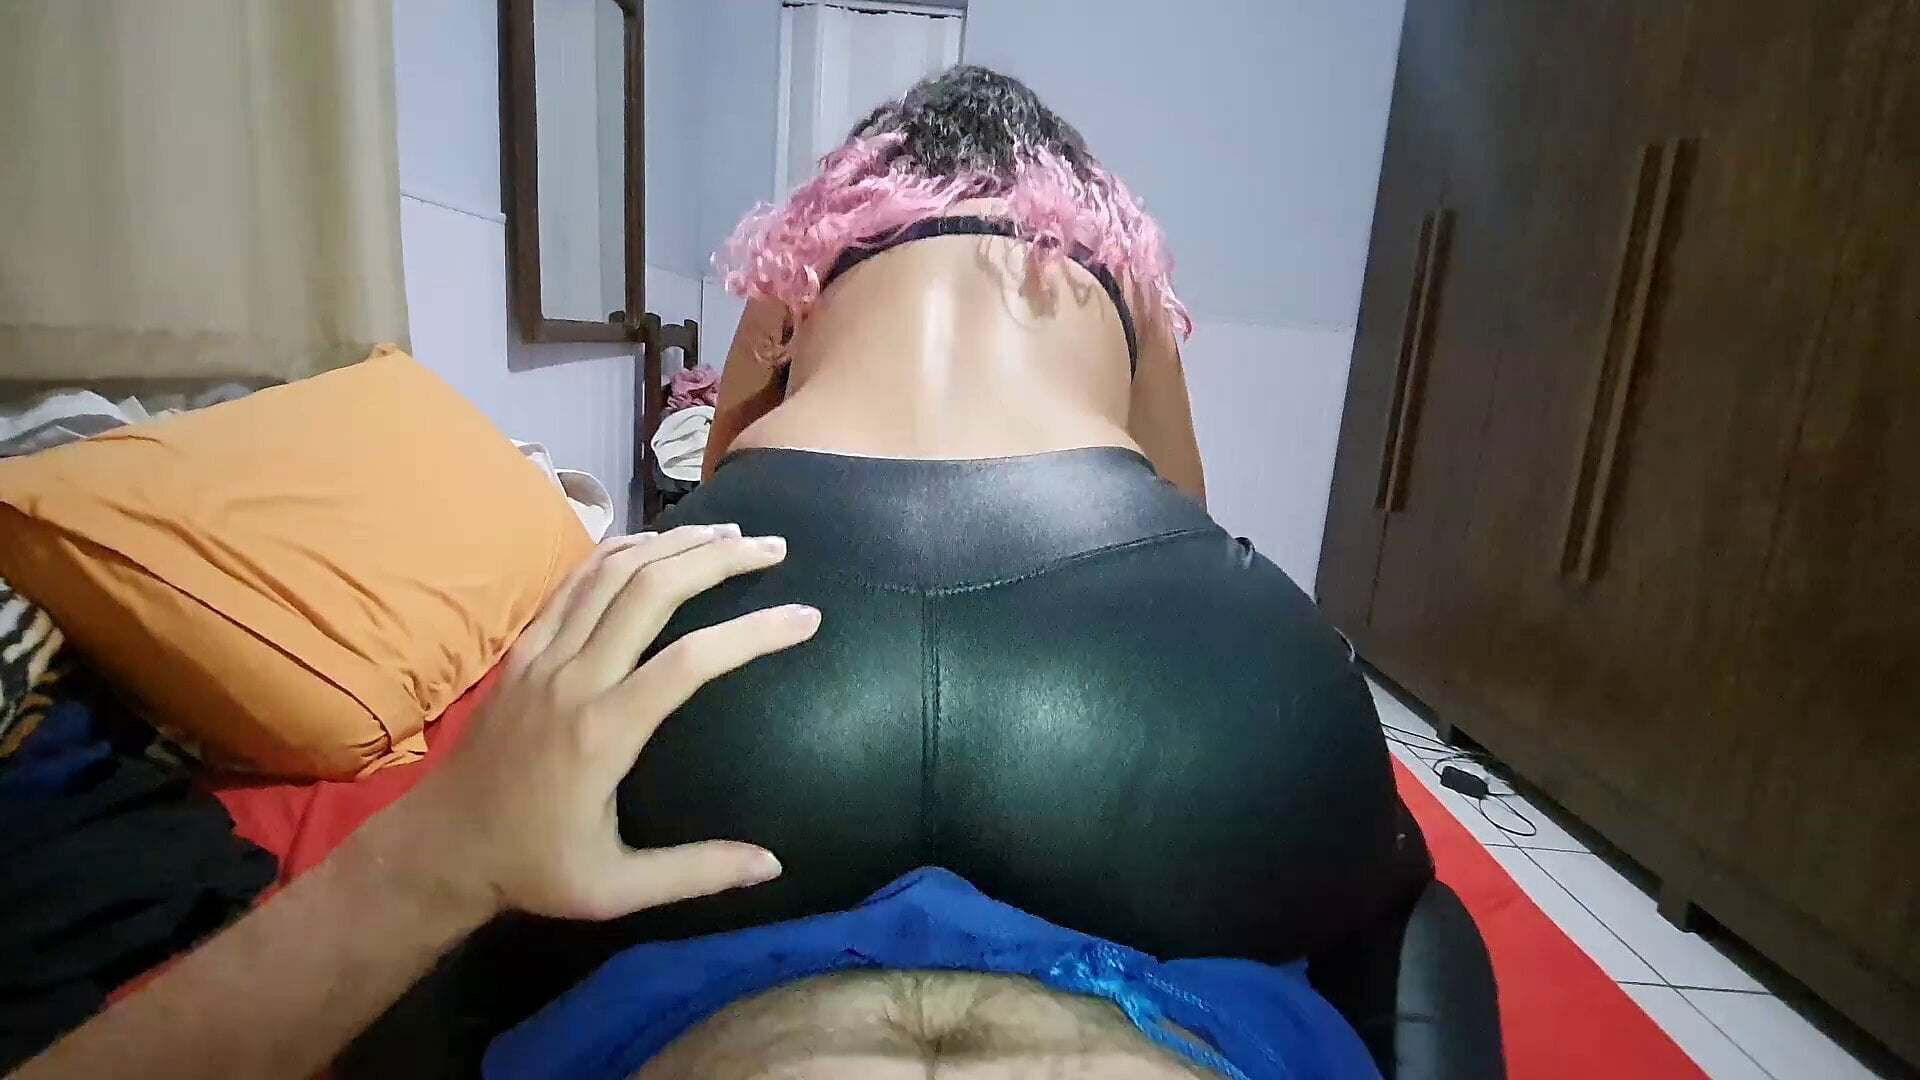 Pink hair, leather leggings, assjob, cum in pants, lapdance, grinding ended with cum in his pants